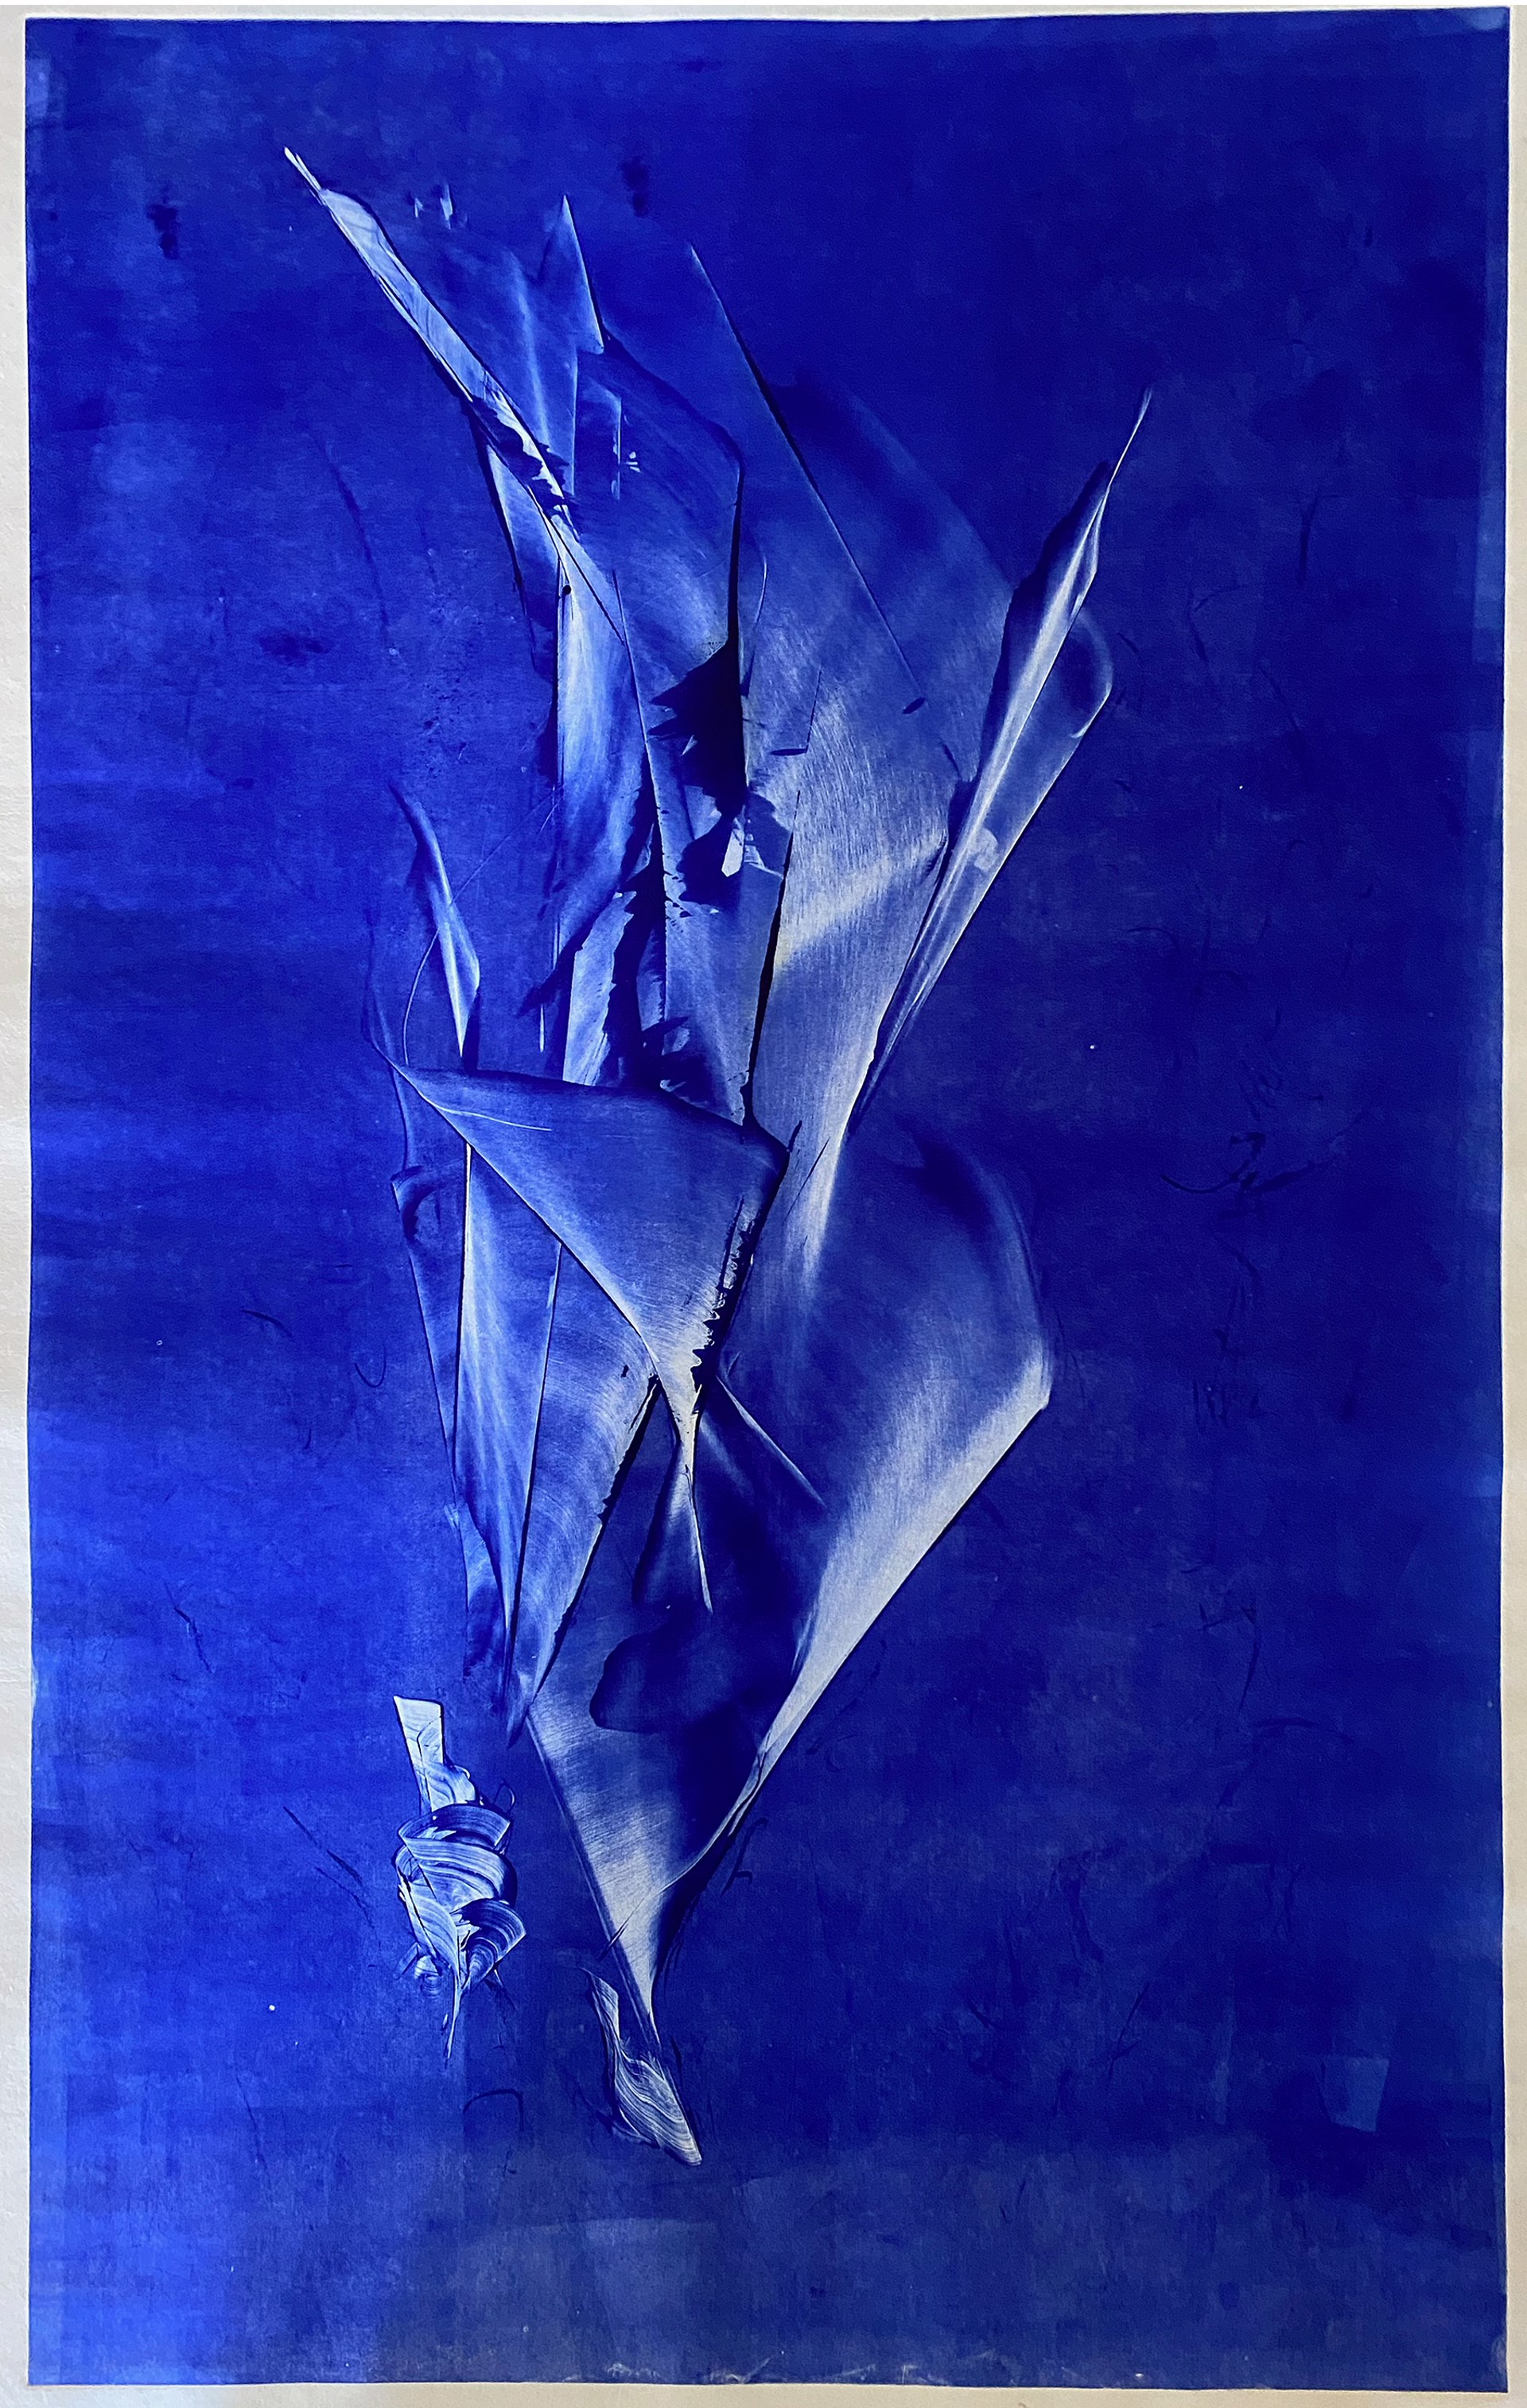 Impromptu 1740.1 (Blue) by Anne Beresford